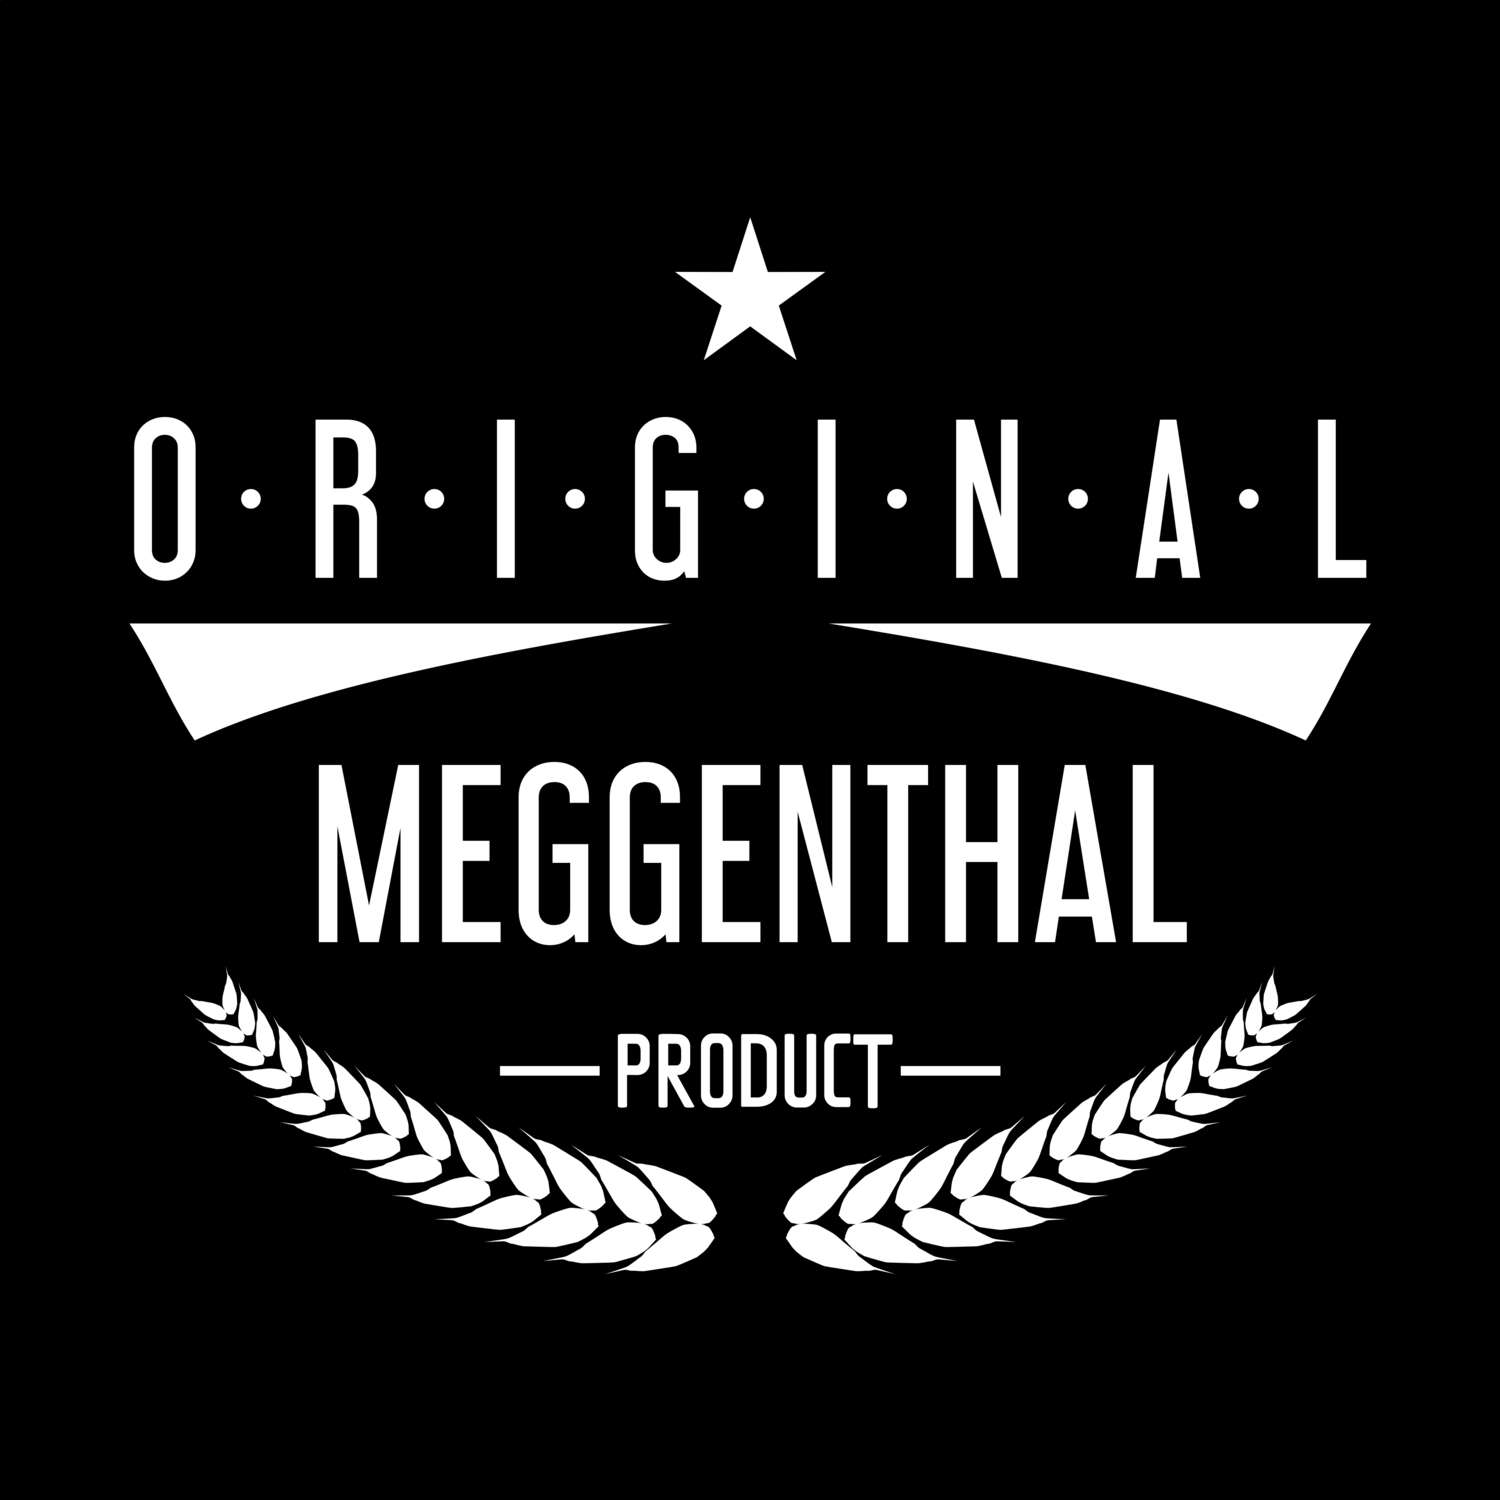 Meggenthal T-Shirt »Original Product«